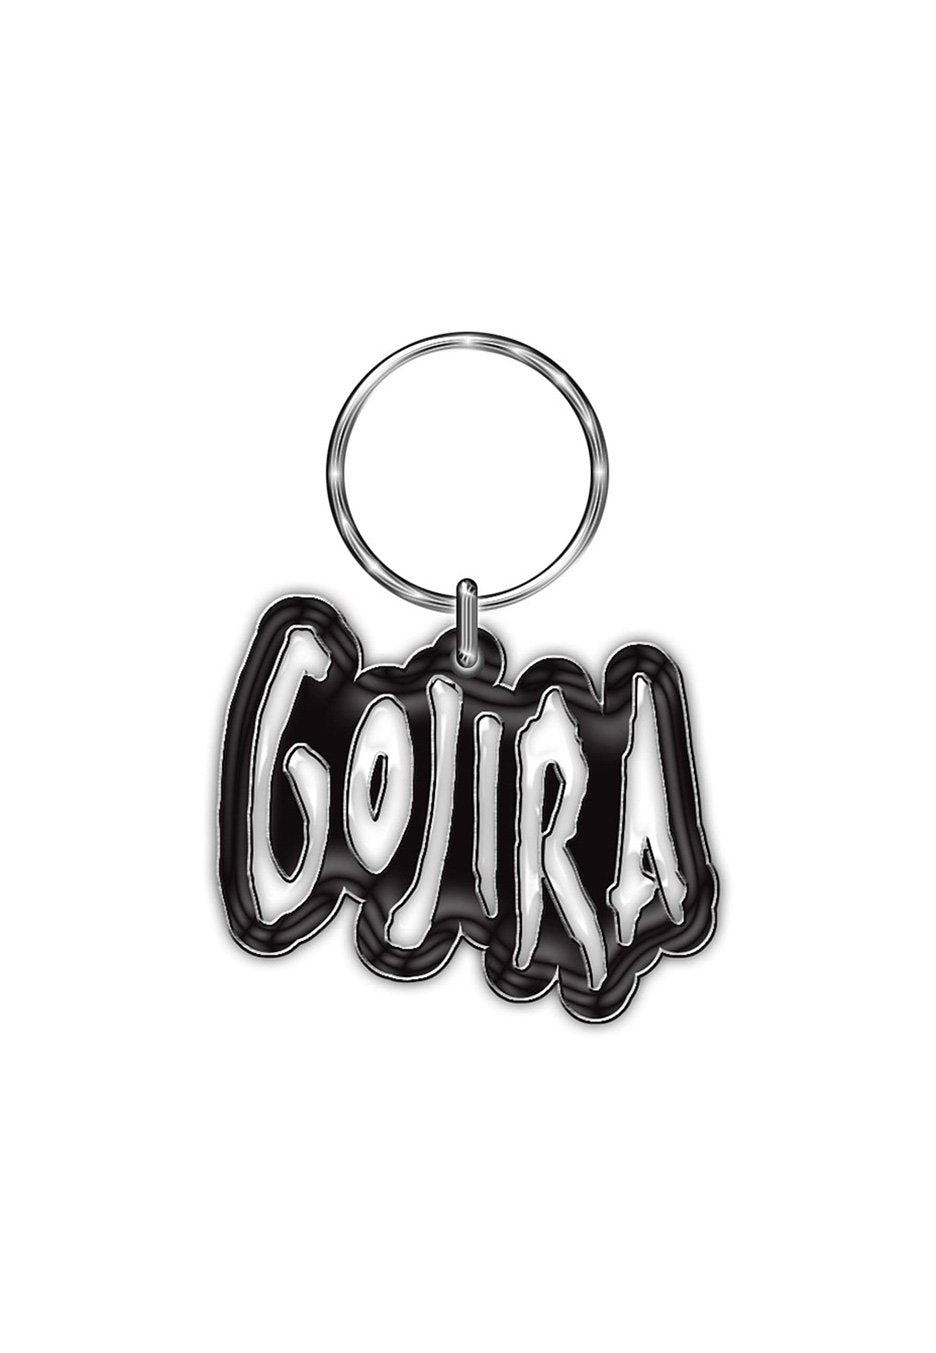 Gojira - Logo - Keychain